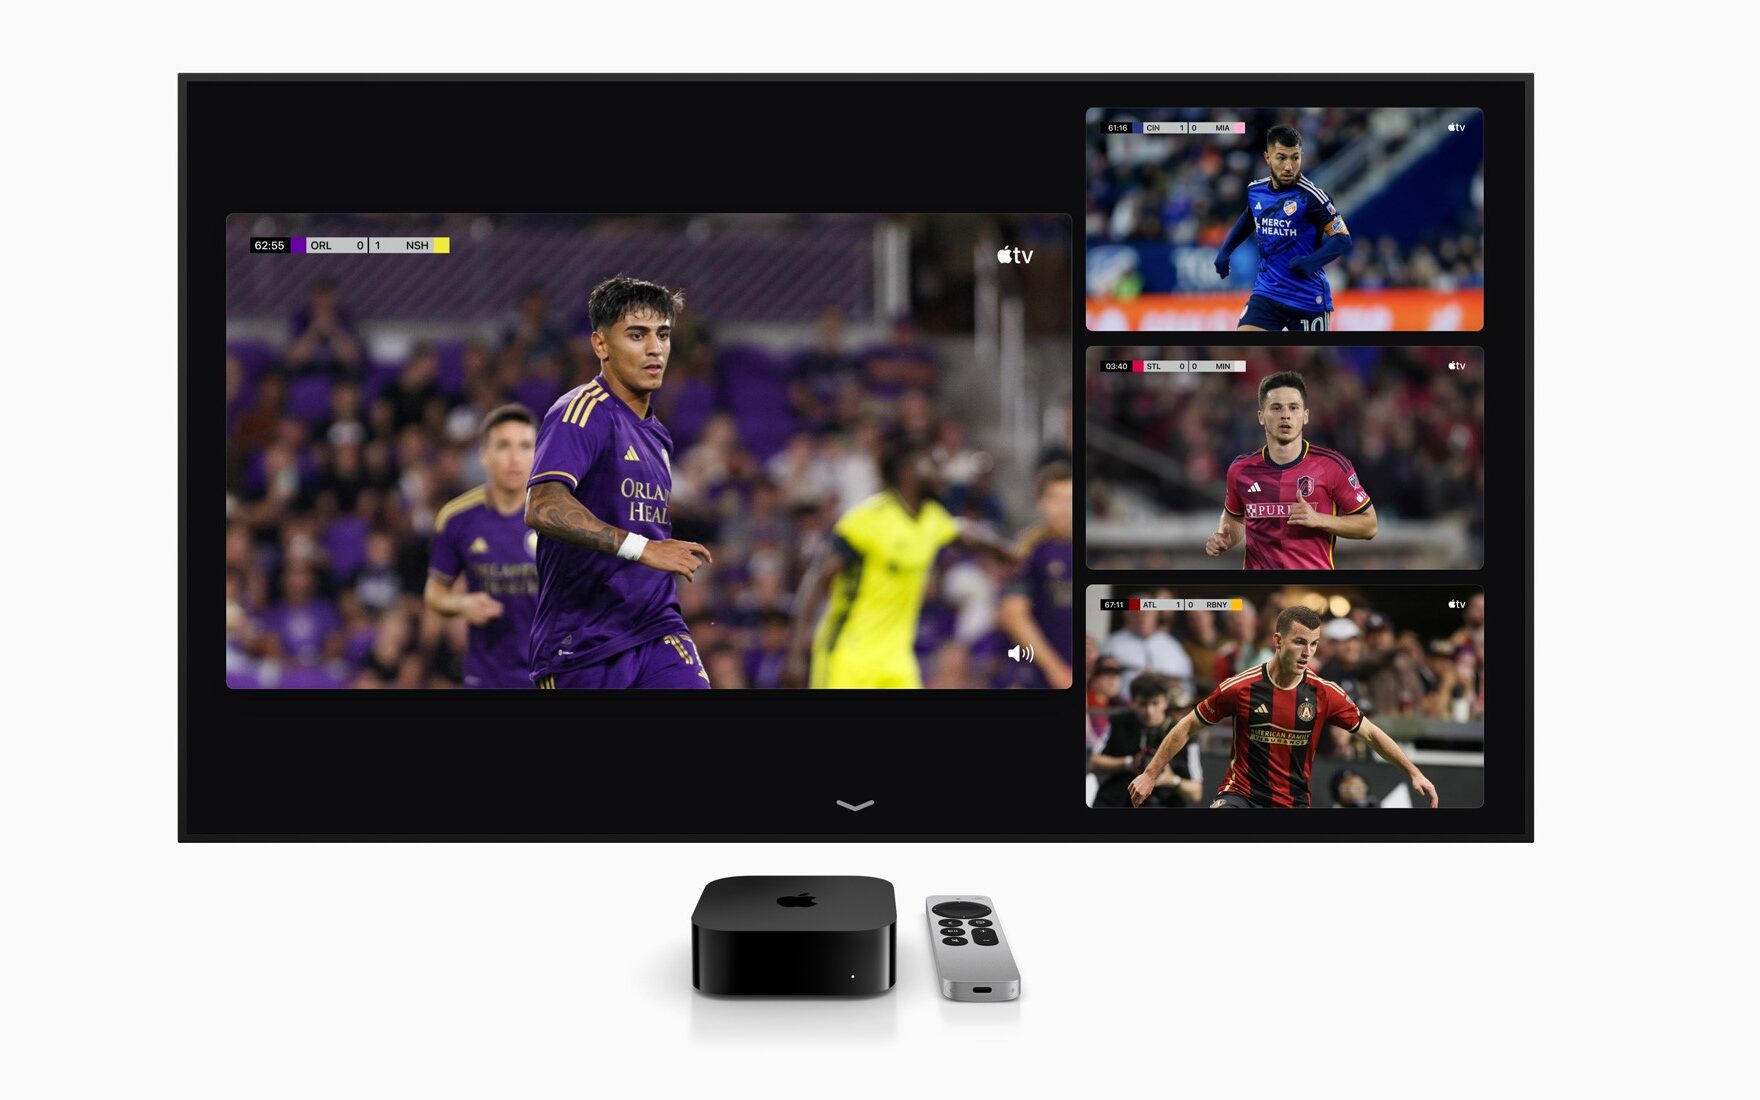 Major League Soccer returns the Apple TV app